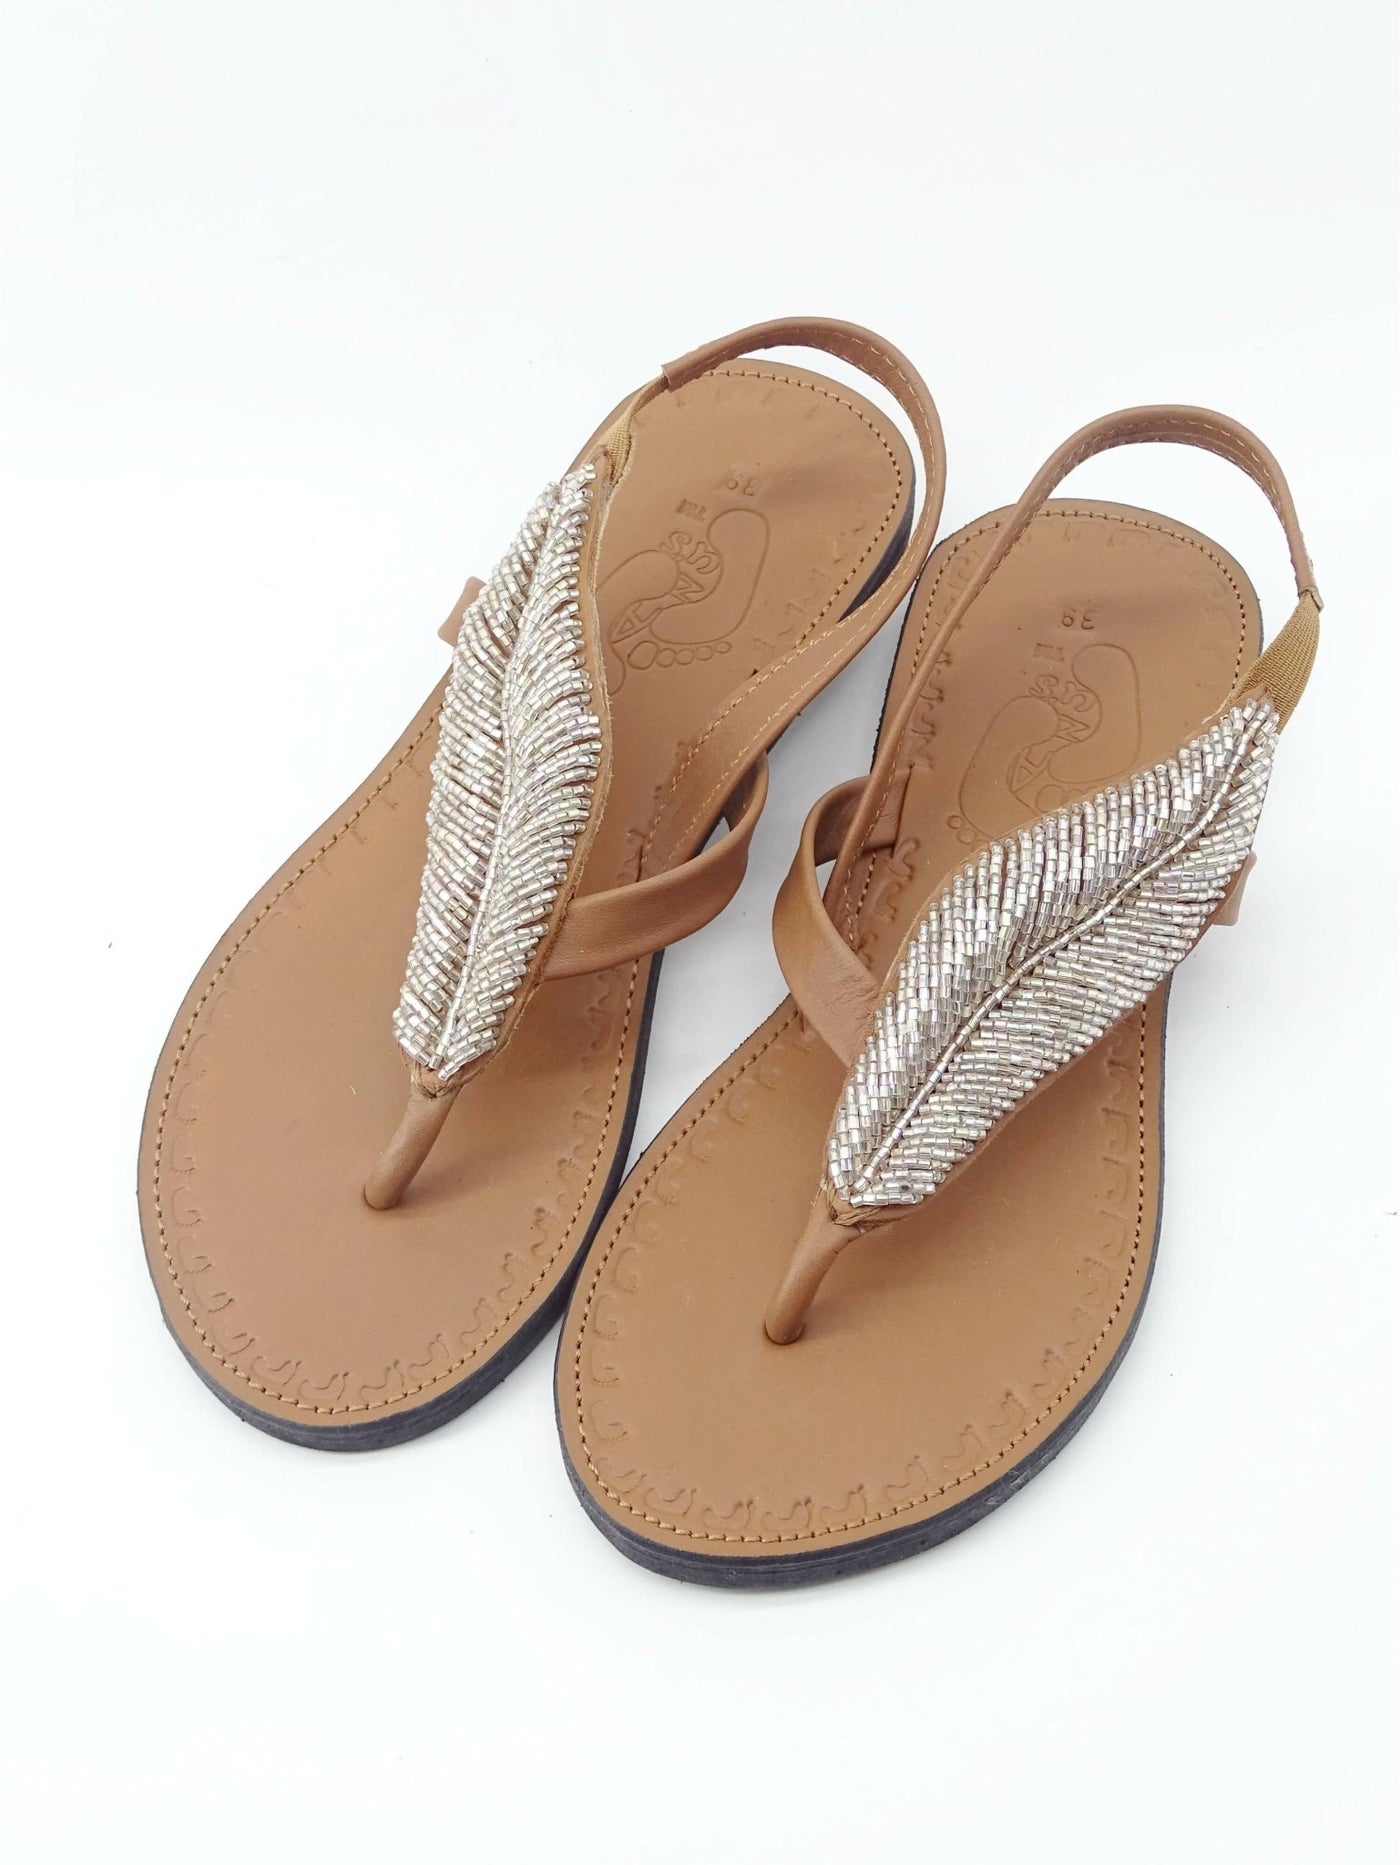 Azu's Leaf Backstrap Sandals - Silver Print / Tan Leather - Shopzetu